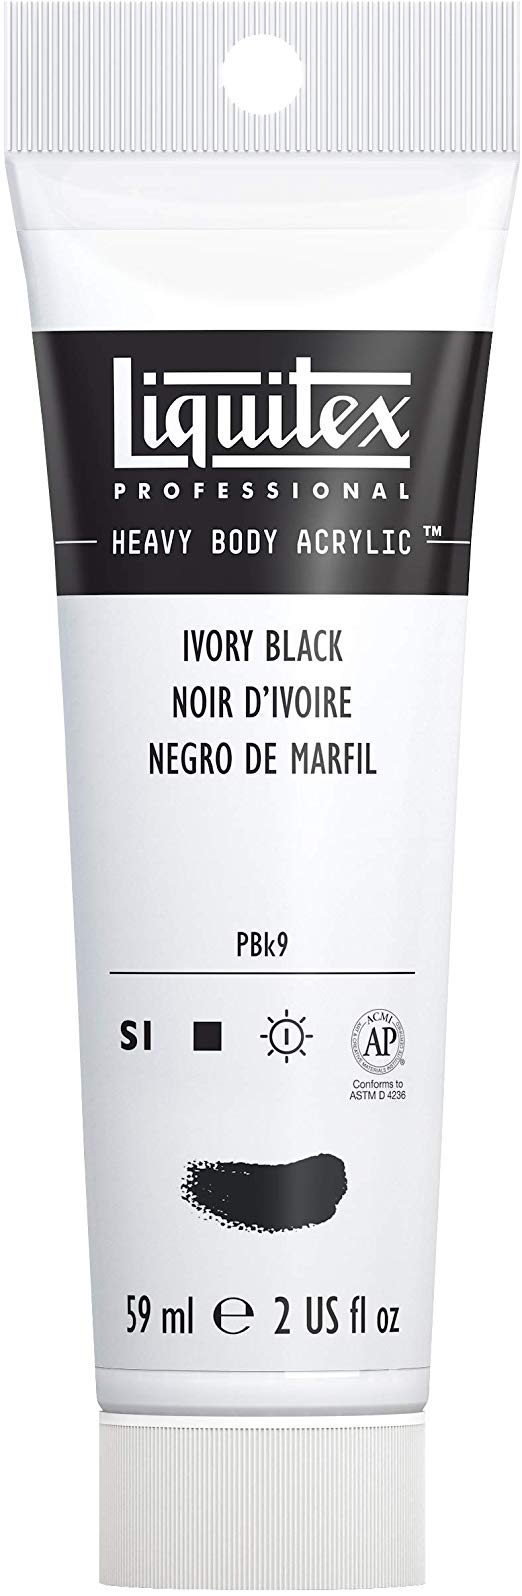 Liquitex Professional Heavy Body Acrylic Paint, 2-oz Tube, Ivory Black